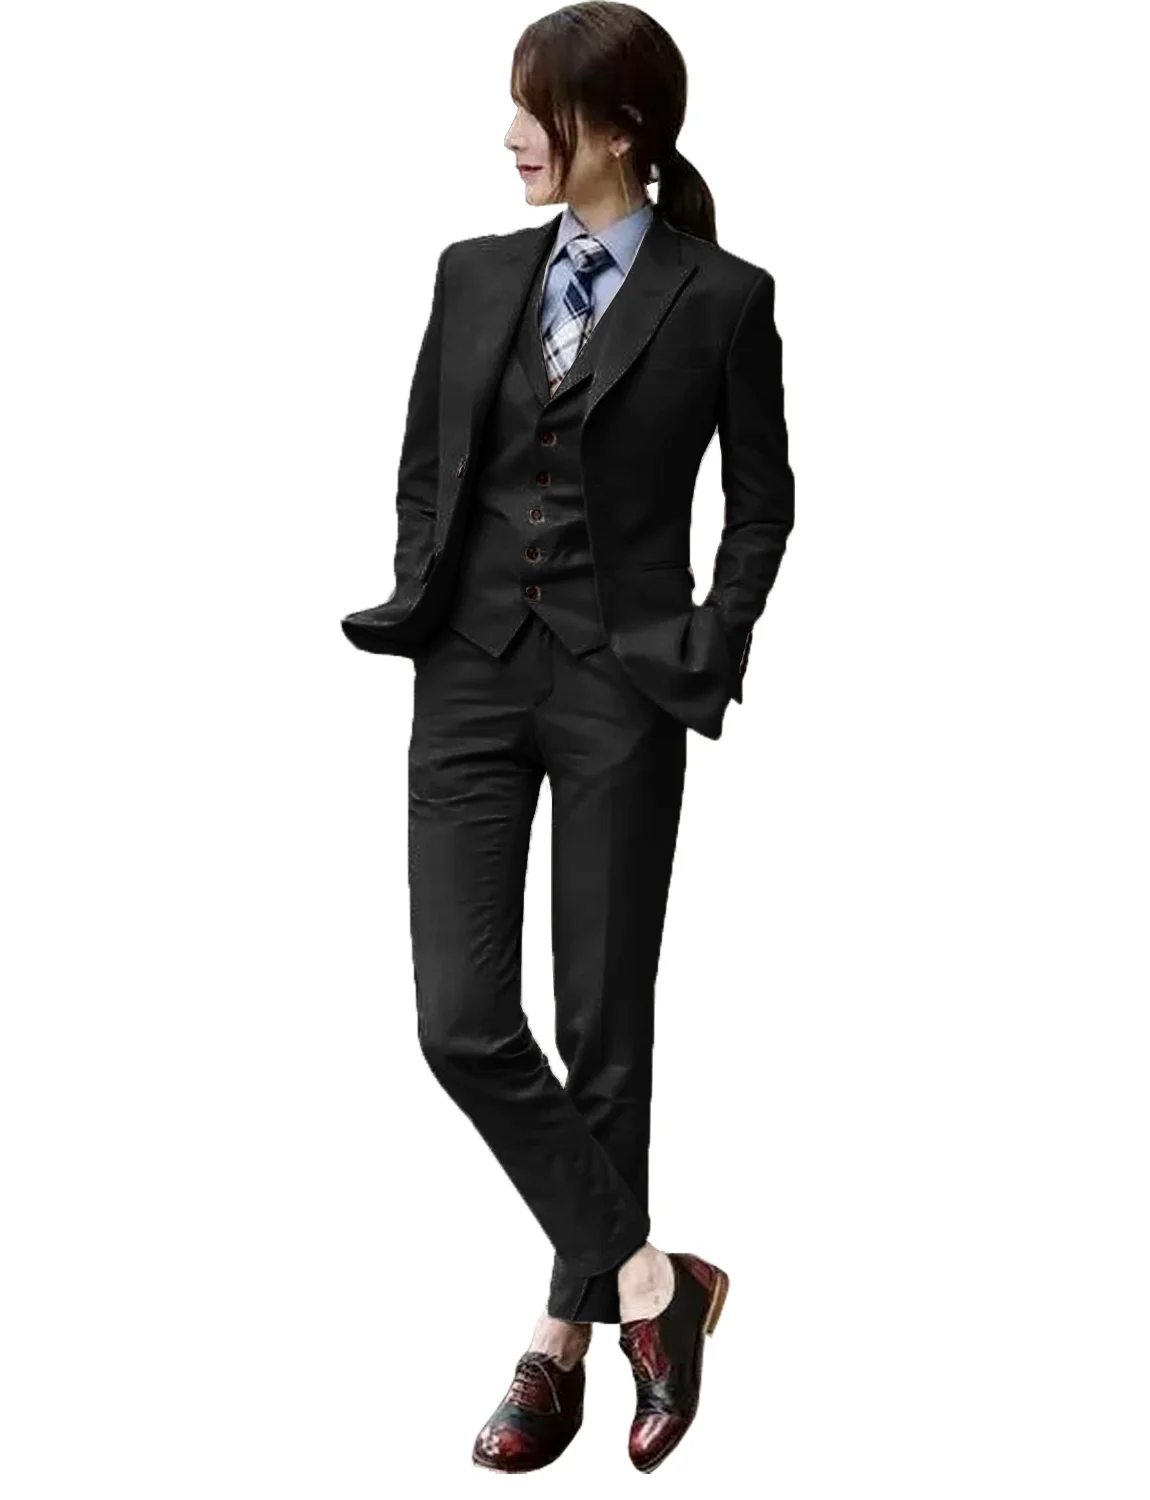 Women's Suit 3 Piece Slim Jacket Vest Trousers Single Breasted Business Formal Office Wear Interview Meeting Tuxedo